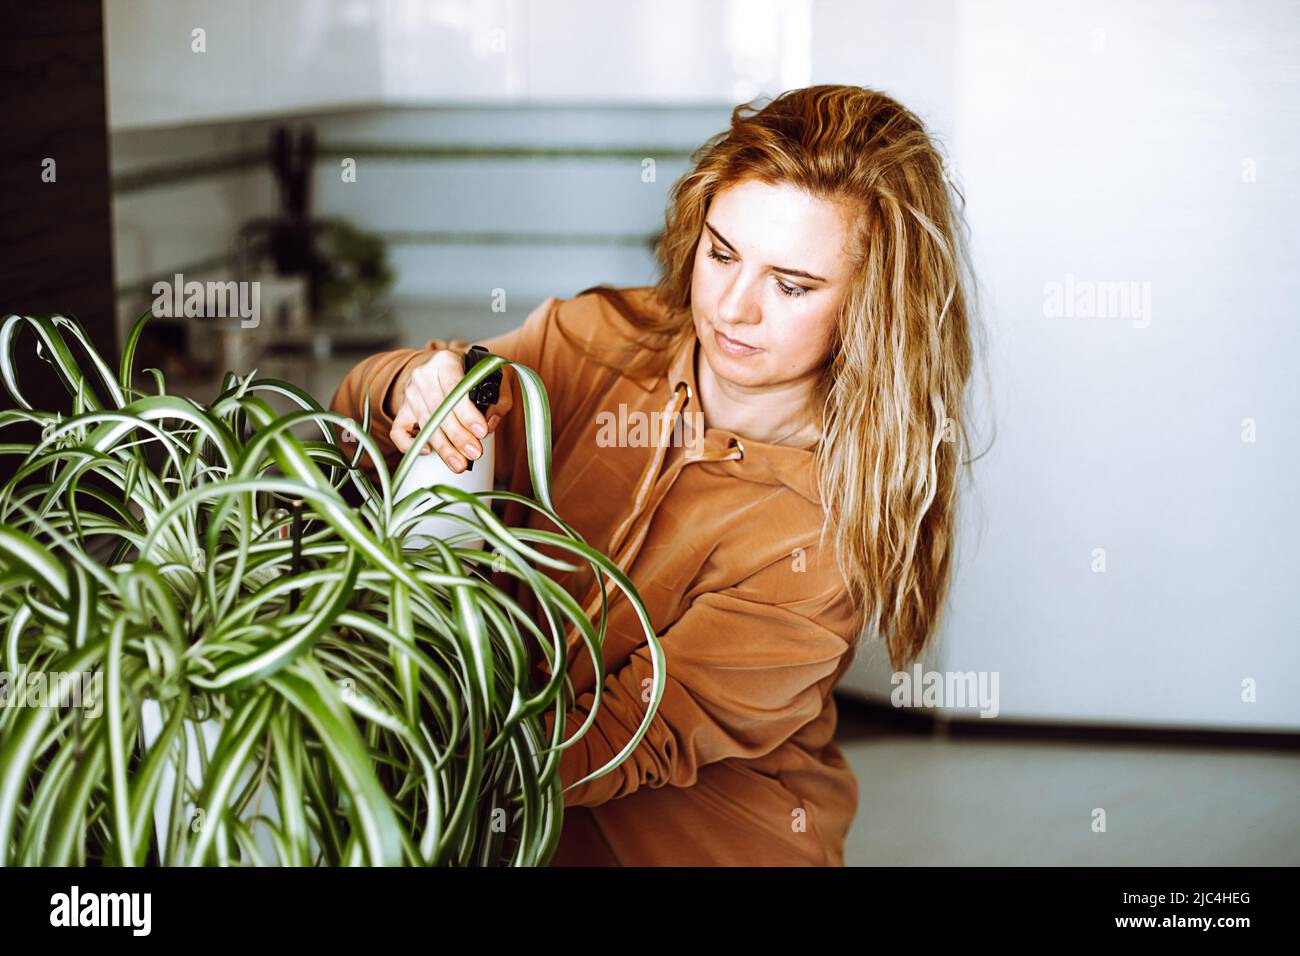 Portrait of young good-looking woman with wavy fair hair wearing brown sweatshirt, watering indoor plant Chlorophytum. Stock Photo